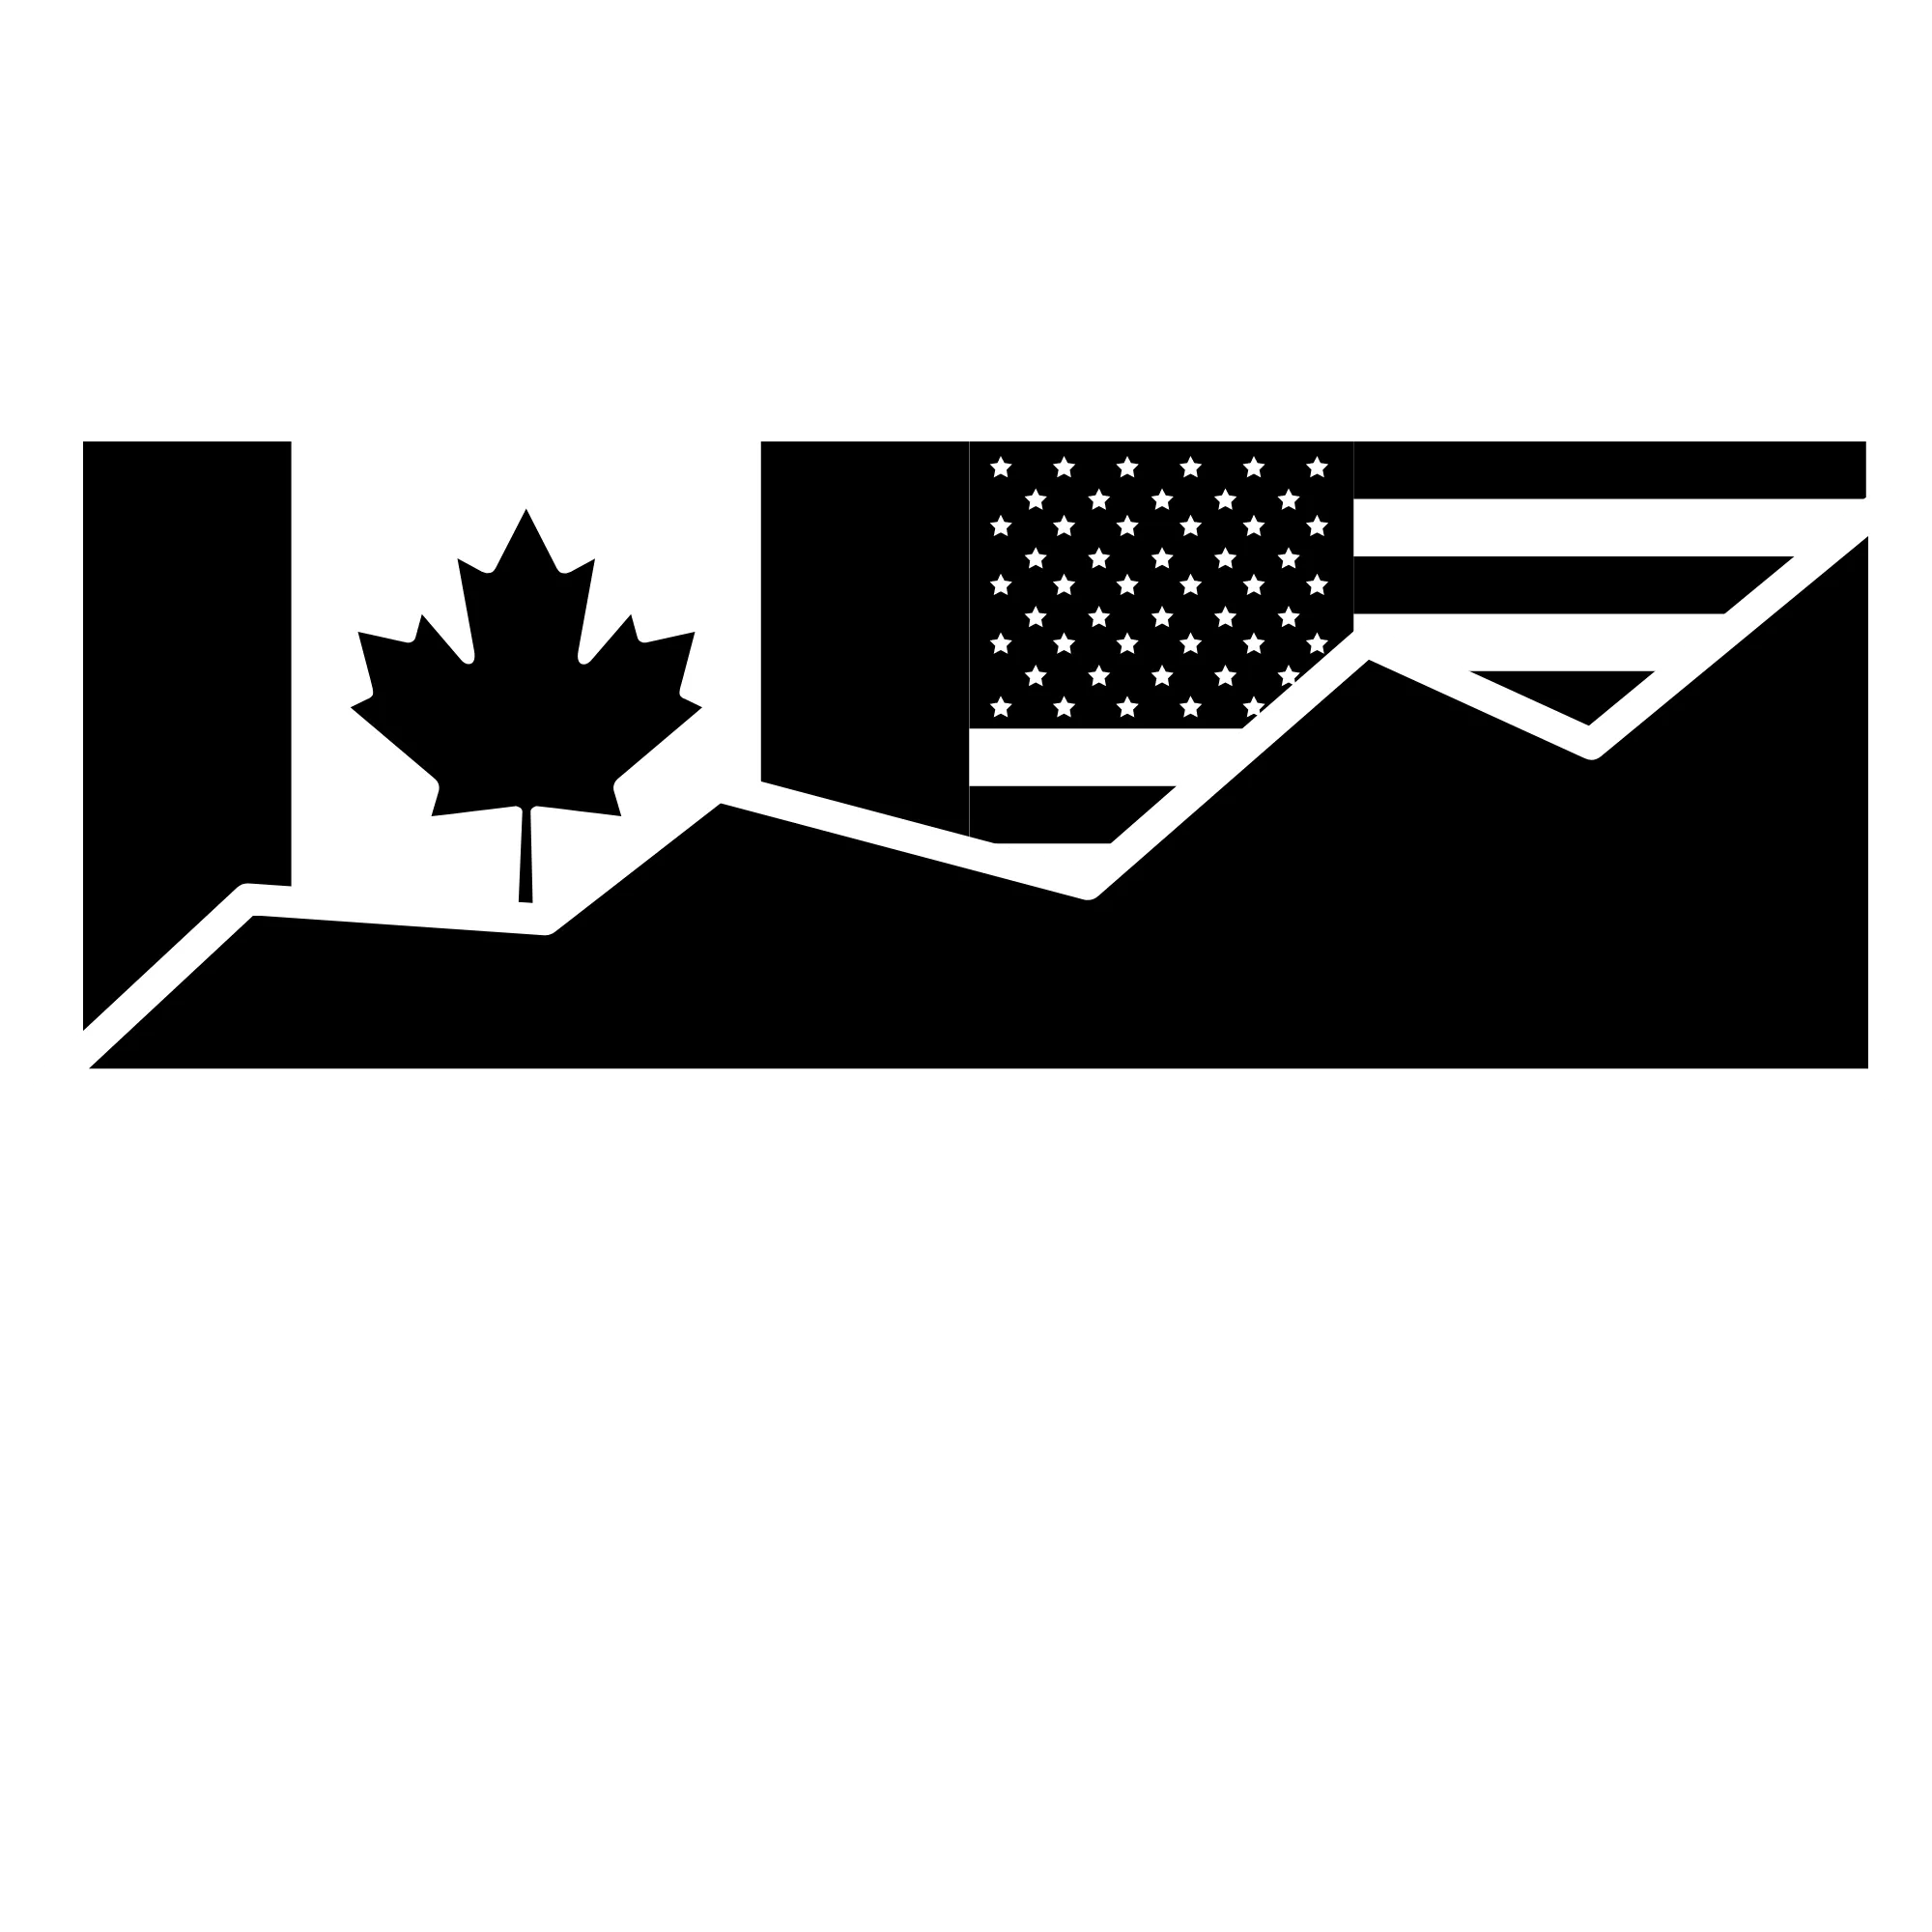 North America Logo